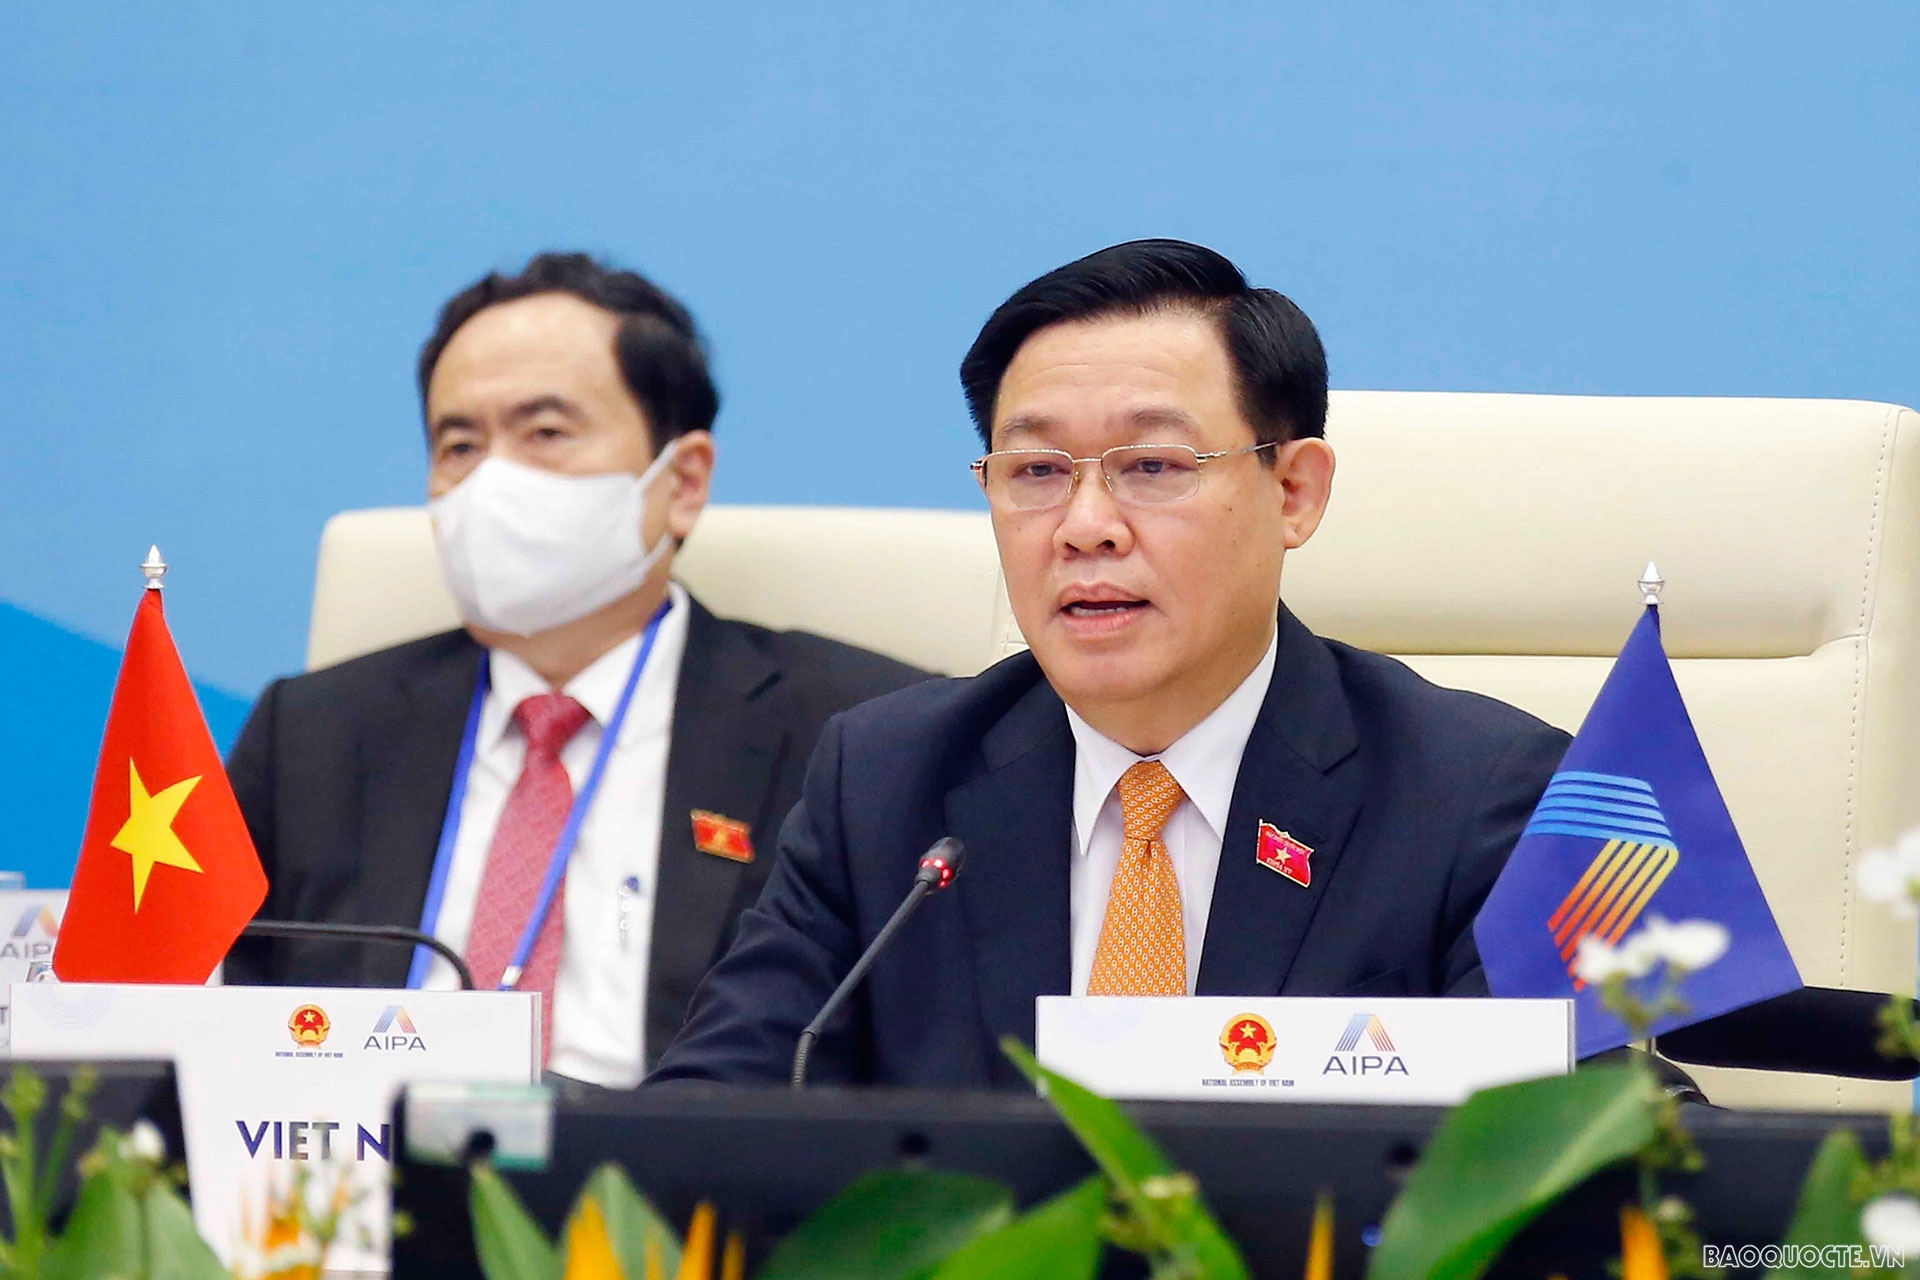 Top legislator Vuong Dinh Hue calls for AIPA’s cooperation in COVID-19 response